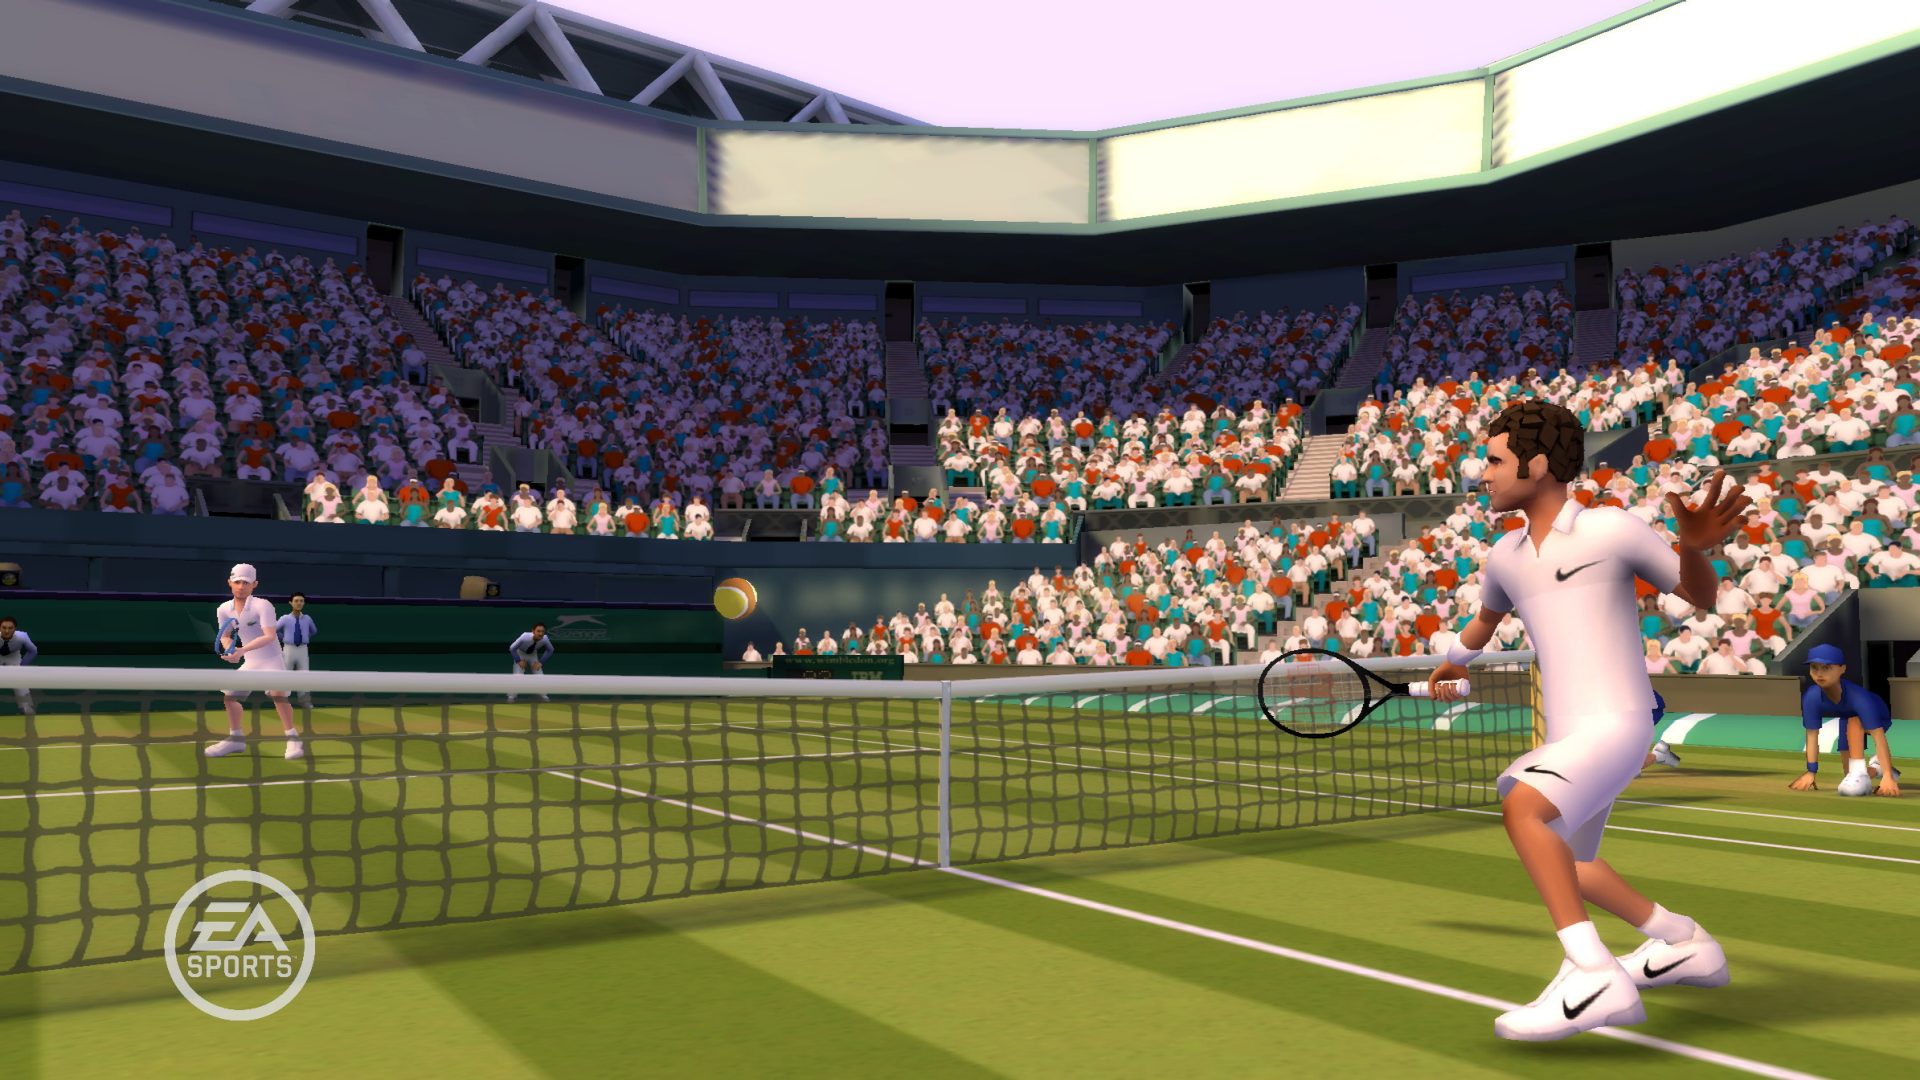 EA Sports Grand Slam Tennis. Теннис игра аристократов. Игра теннис на ПК 2д. Wii Tennis. Теннисные названия